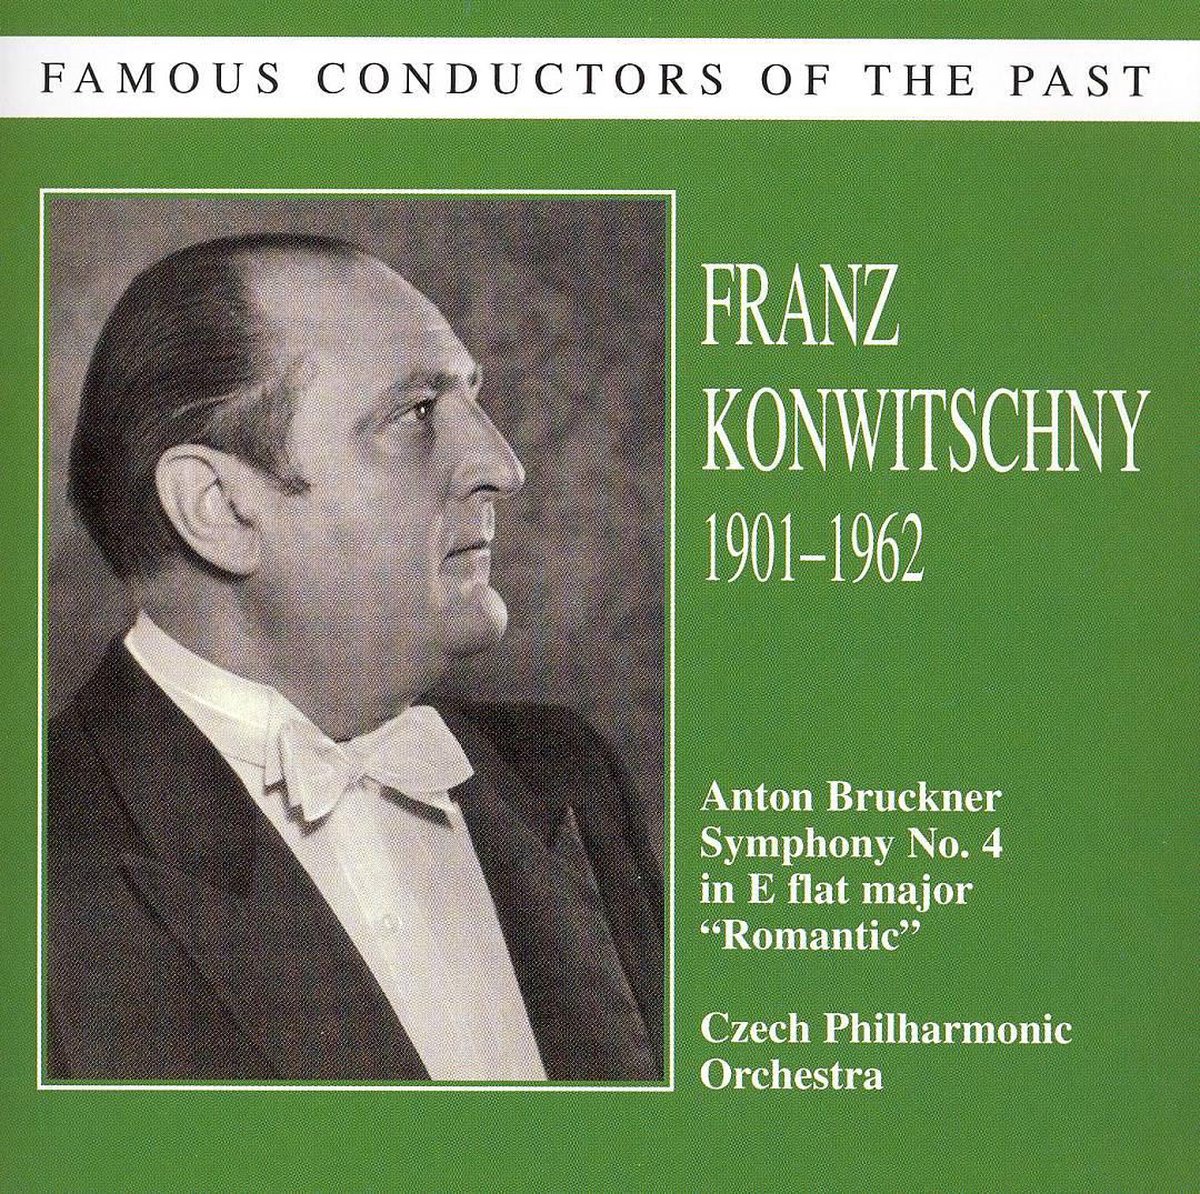 Afbeelding van product Symphony No. 4 Romantic  - Franz Konwitschny